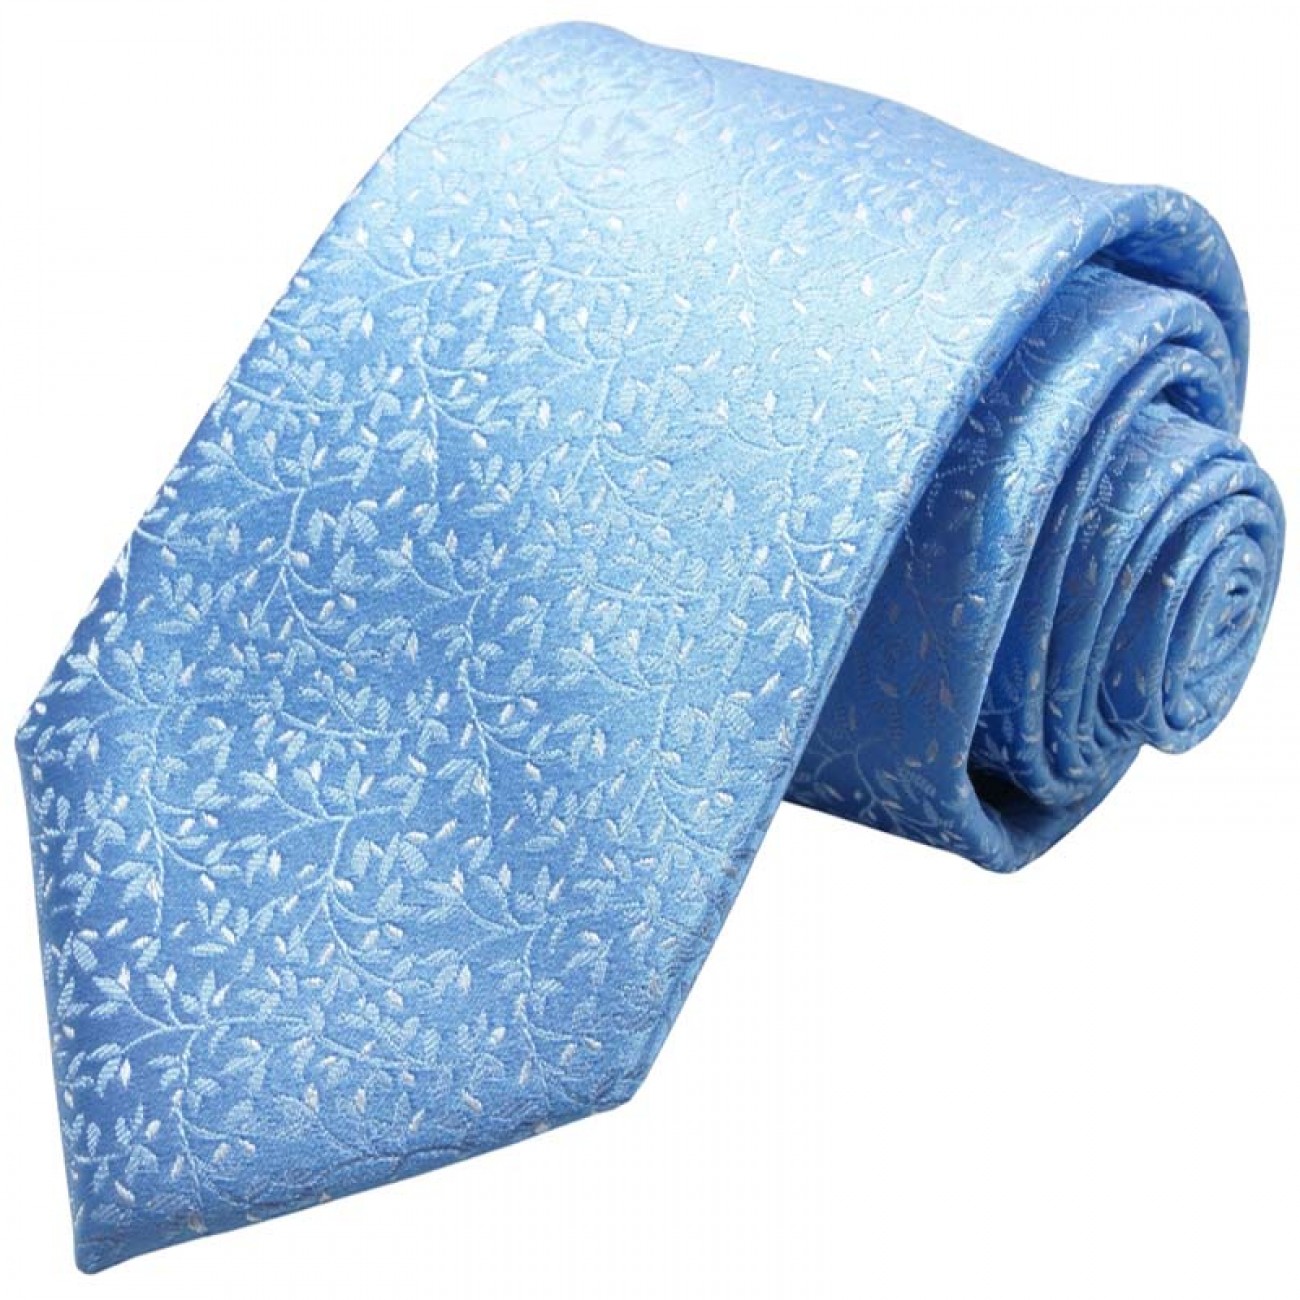 Blue white floral wedding necktie - Weddingclothes